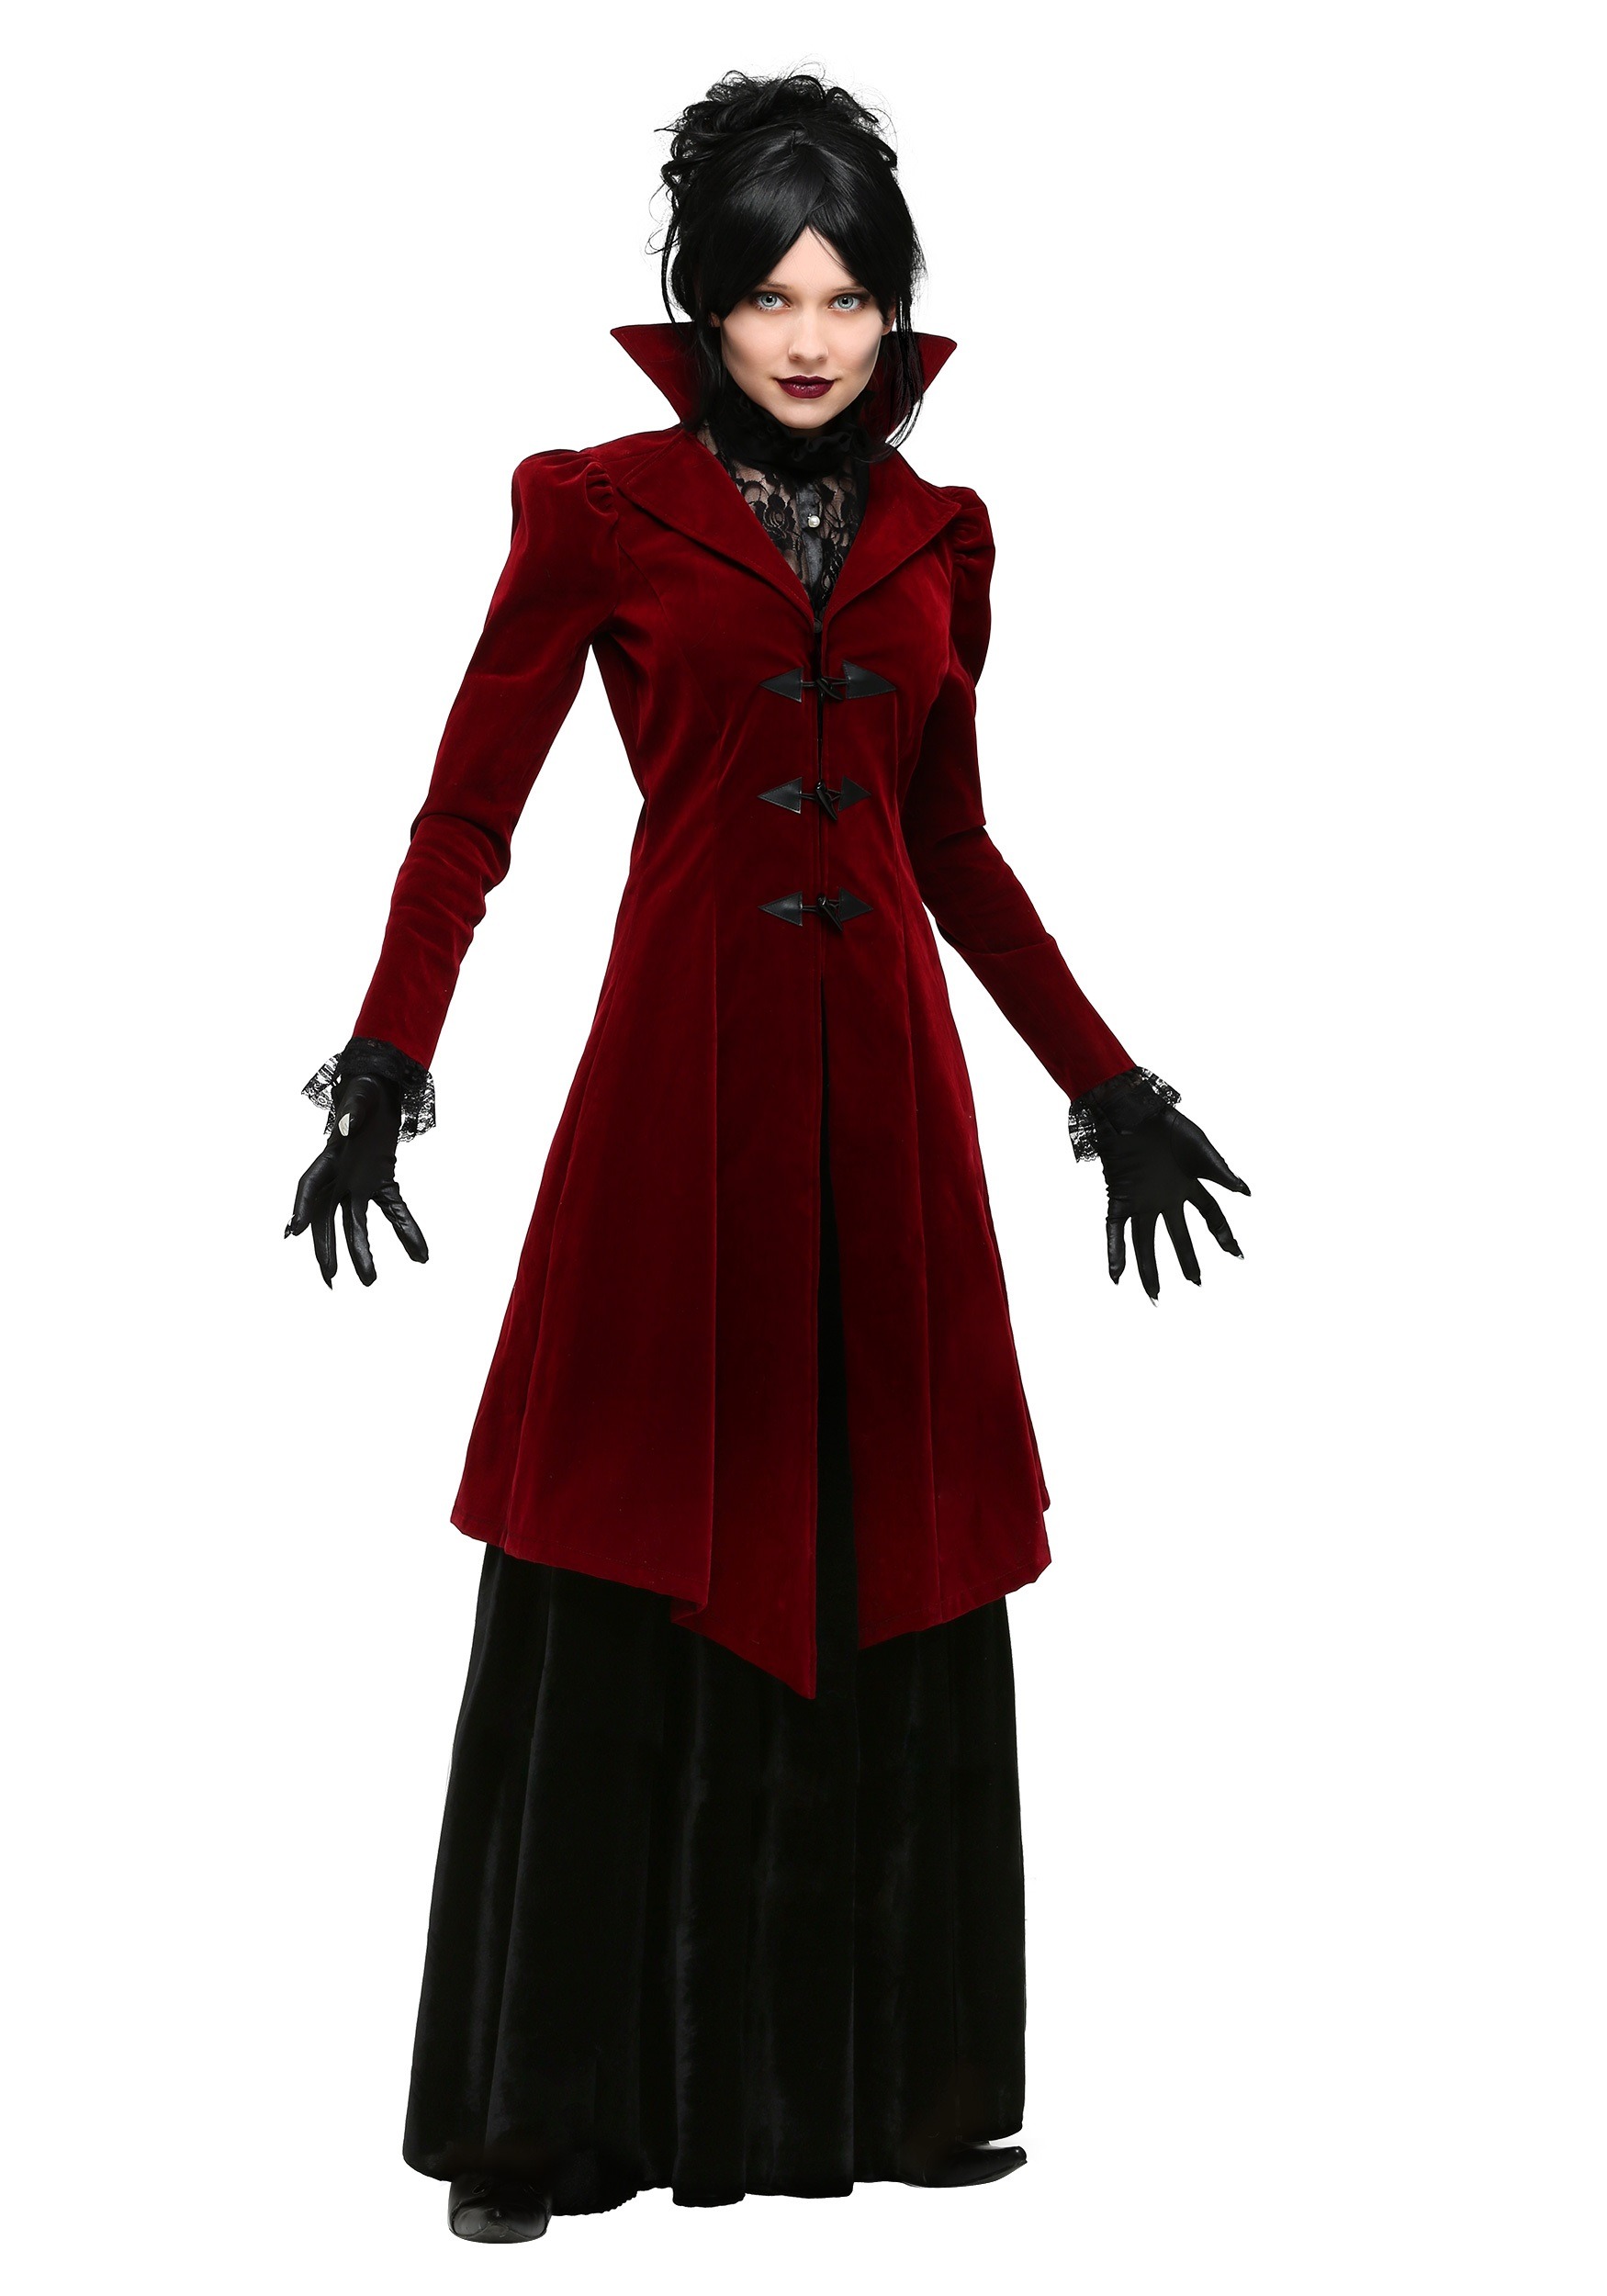 Plus Size Delightfully Dreadful Vampiress Women's Costume